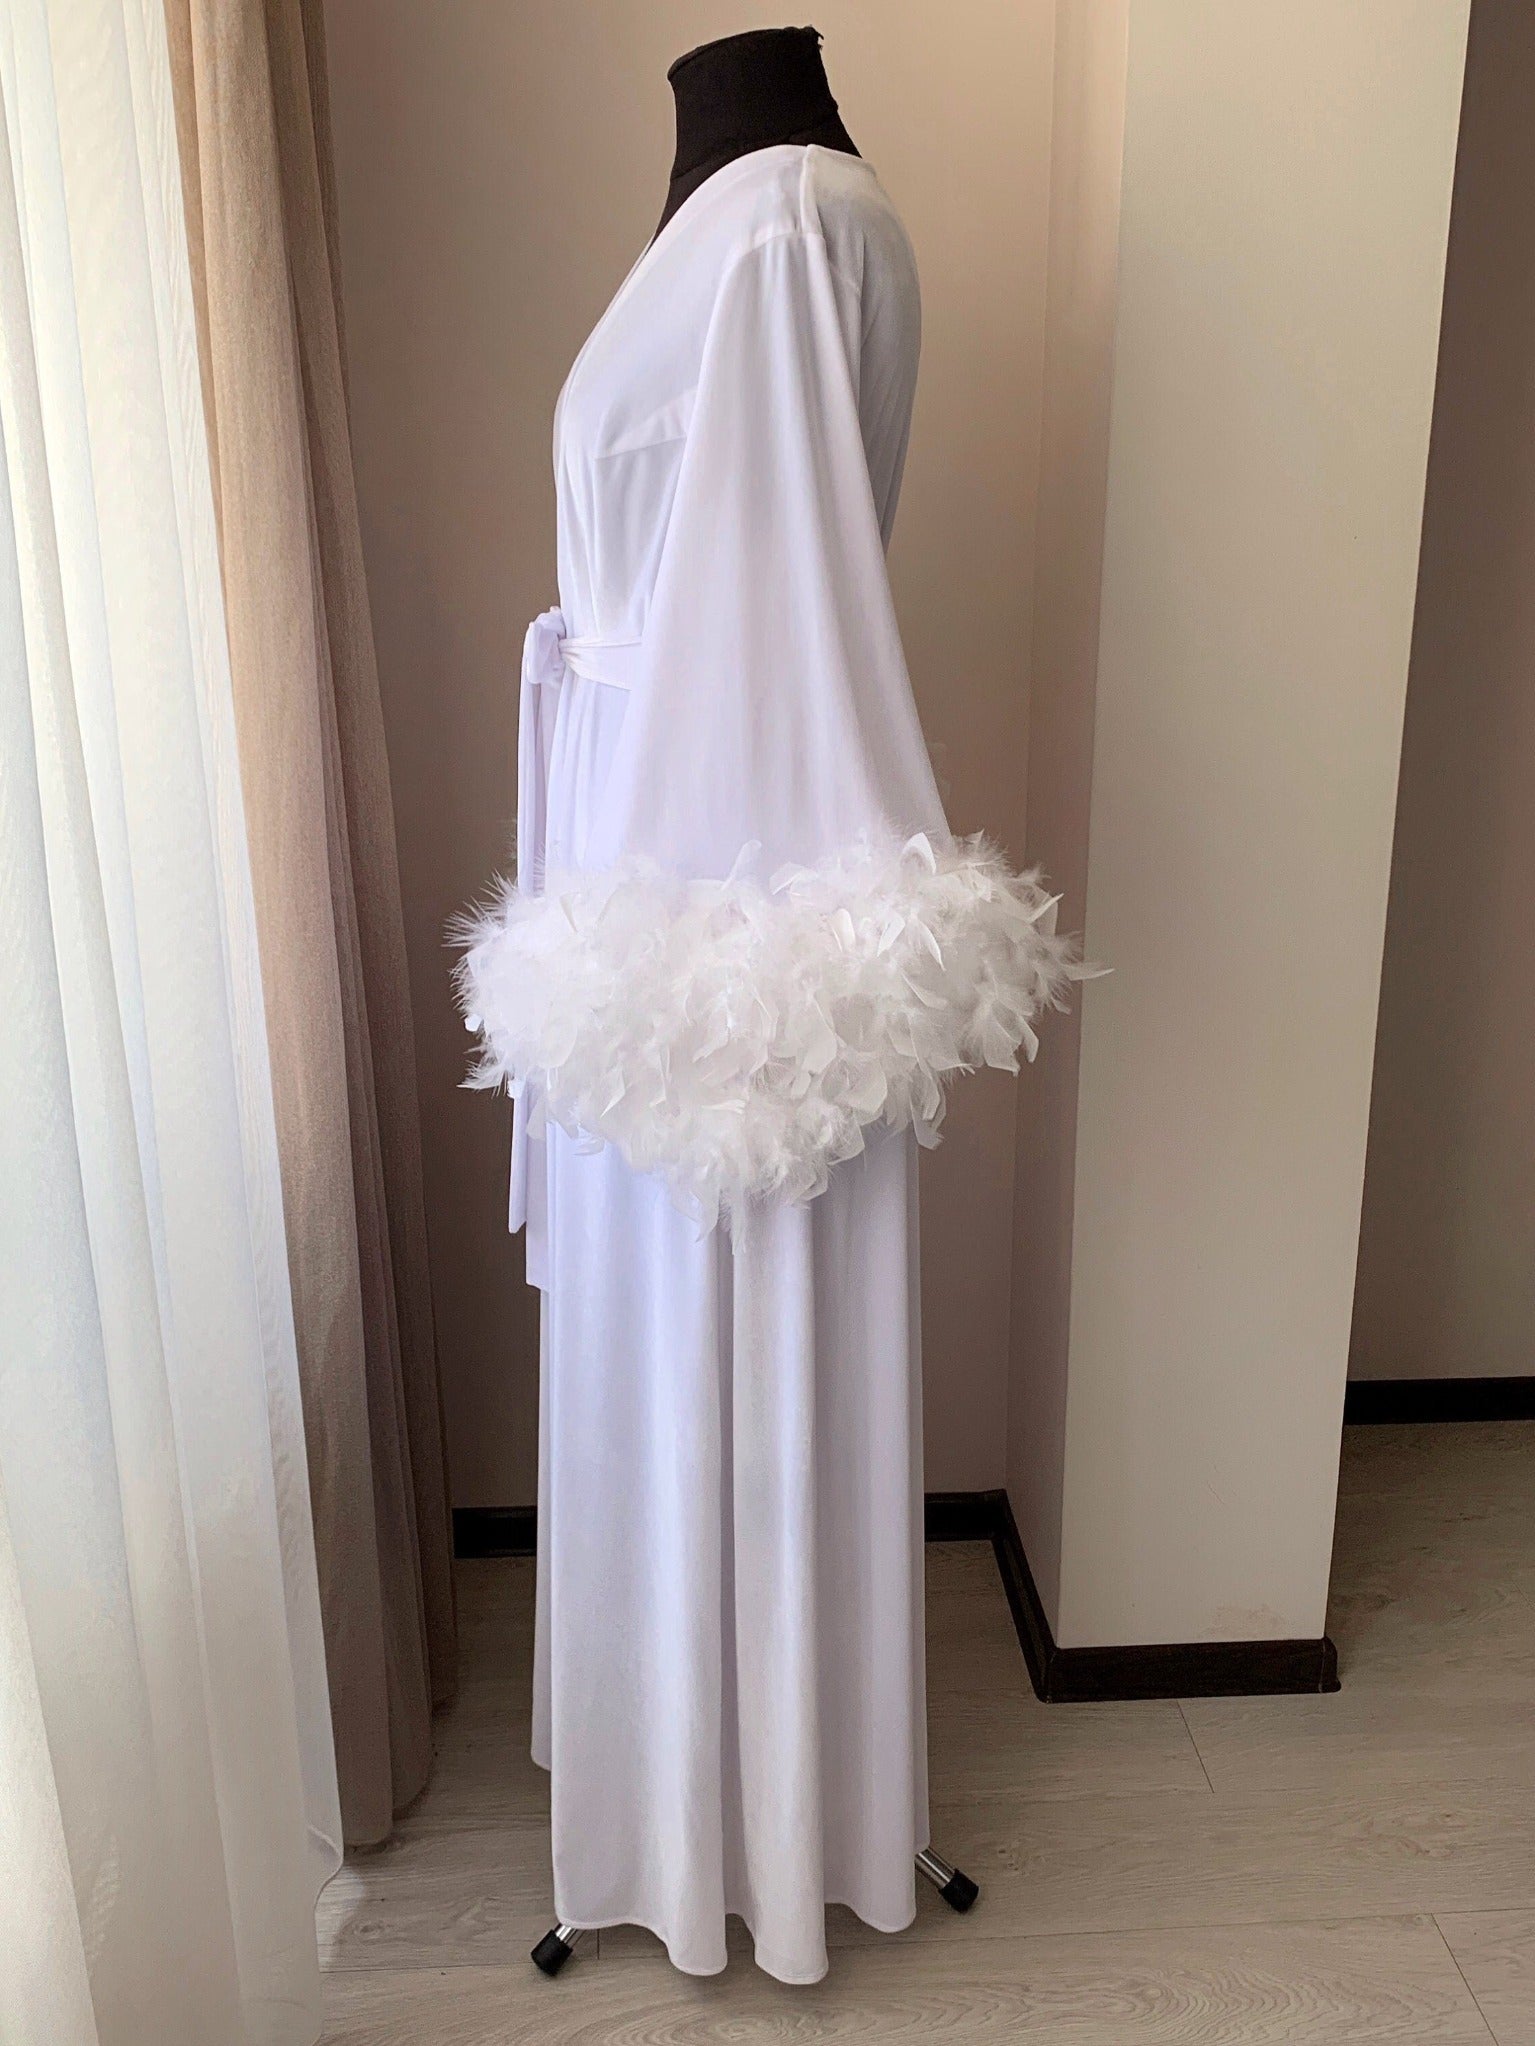 Velvet robe with feathers